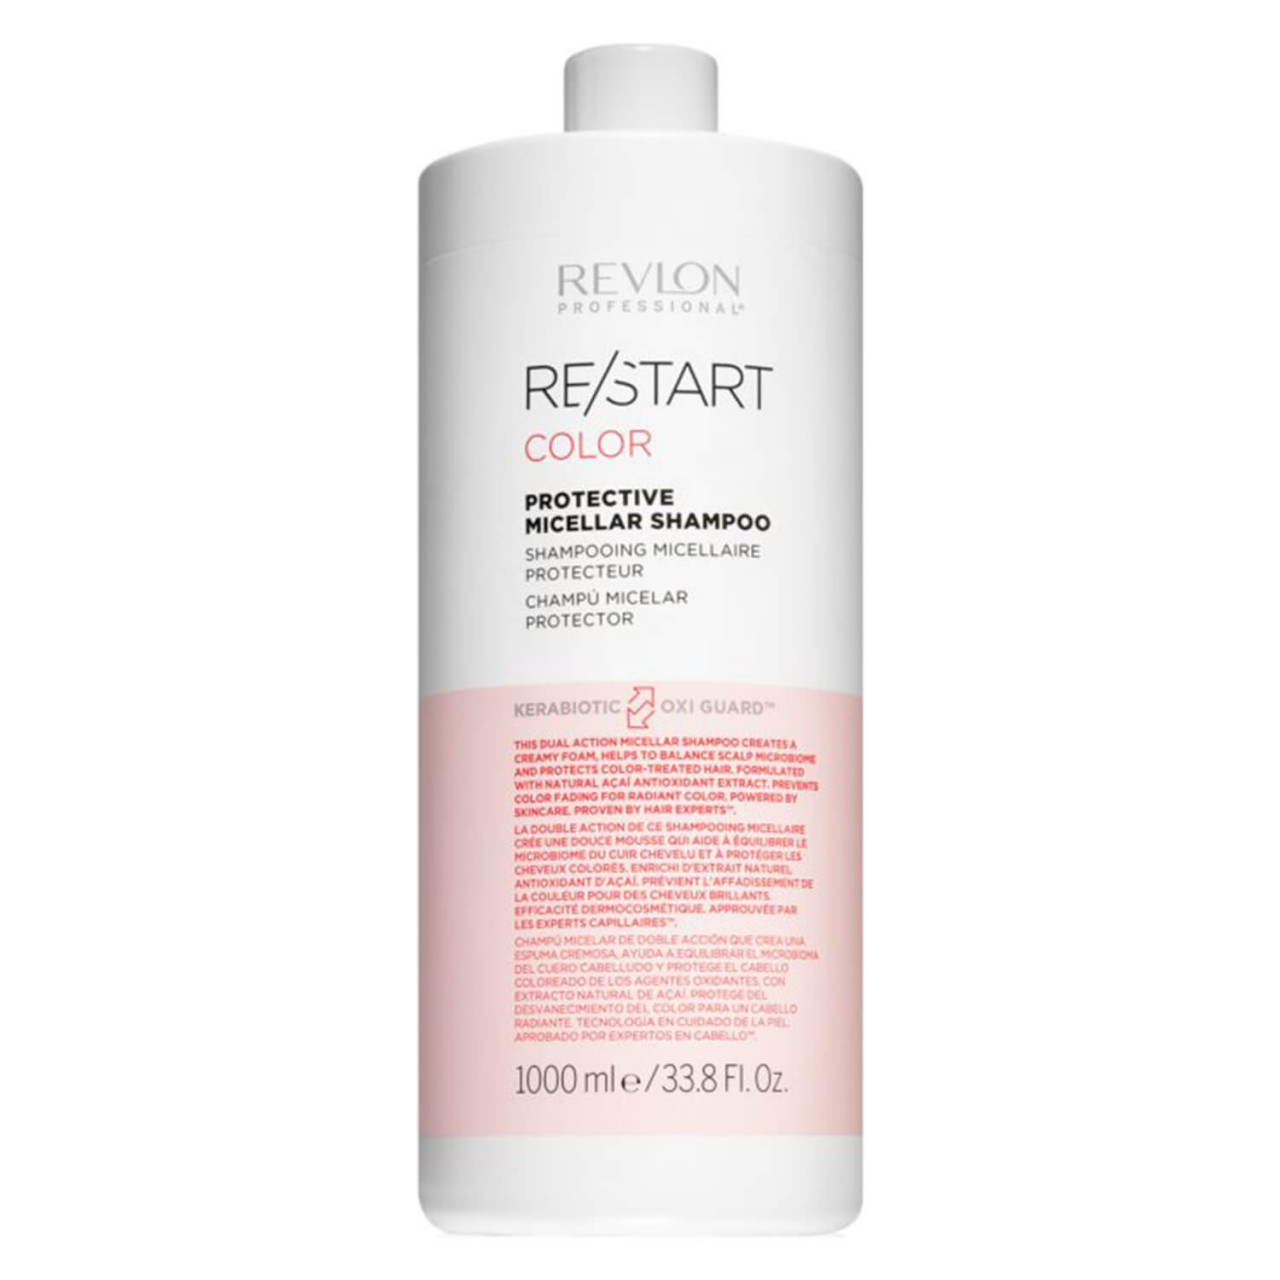 RE/START COLOR - Protective Micellar Shampoo von Revlon Professional